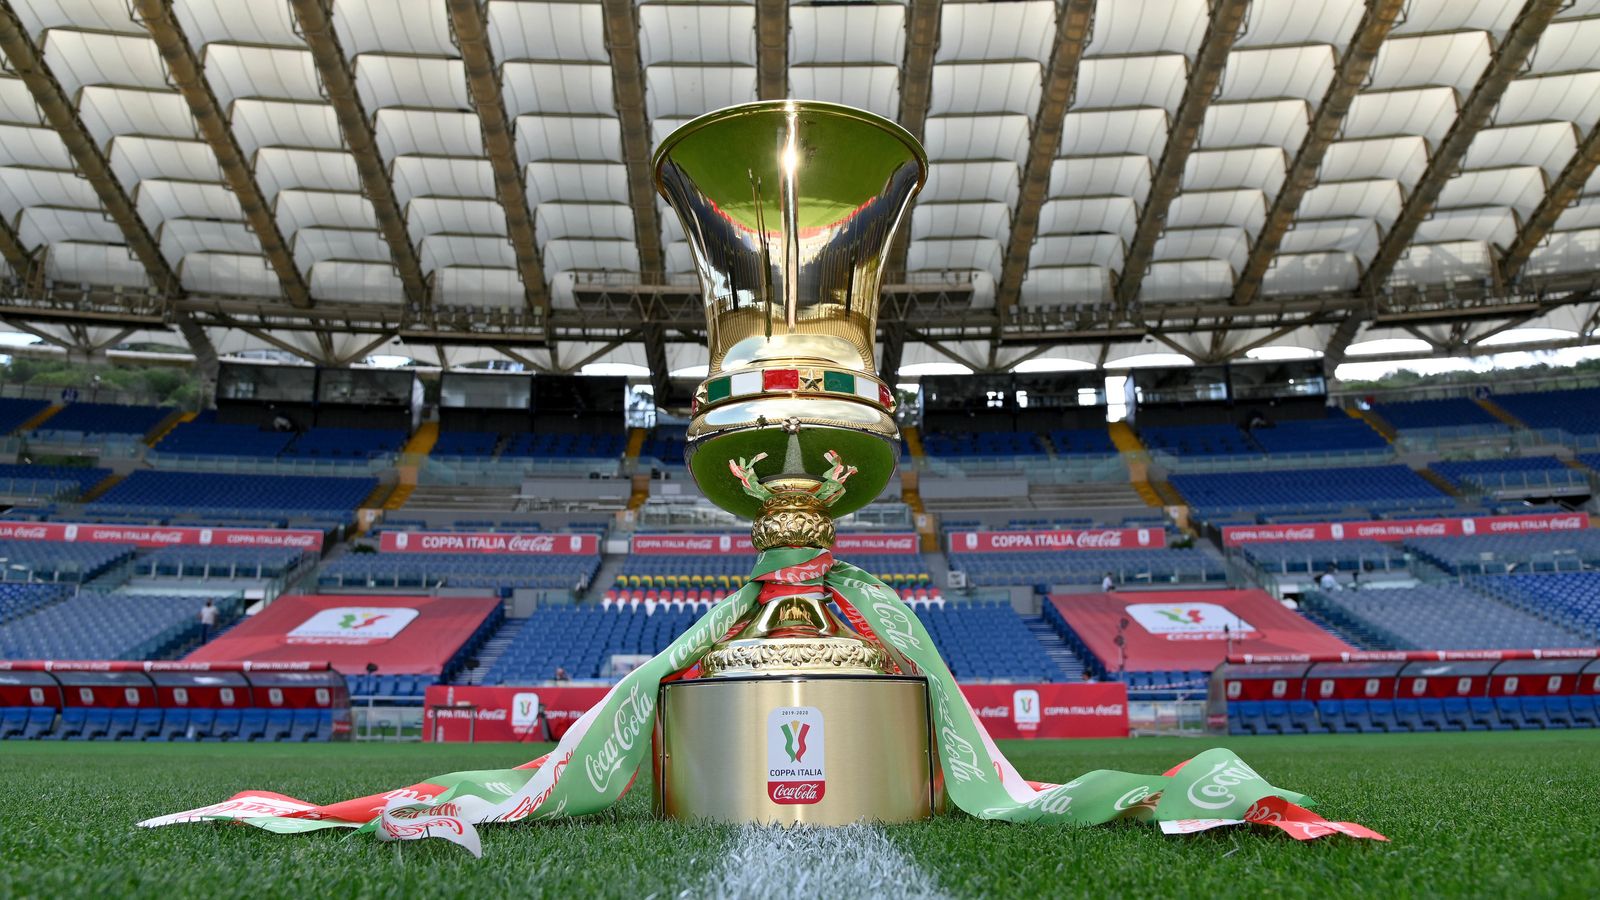 Coppa Italia final: Napoli and Juventus face self-service medal ...